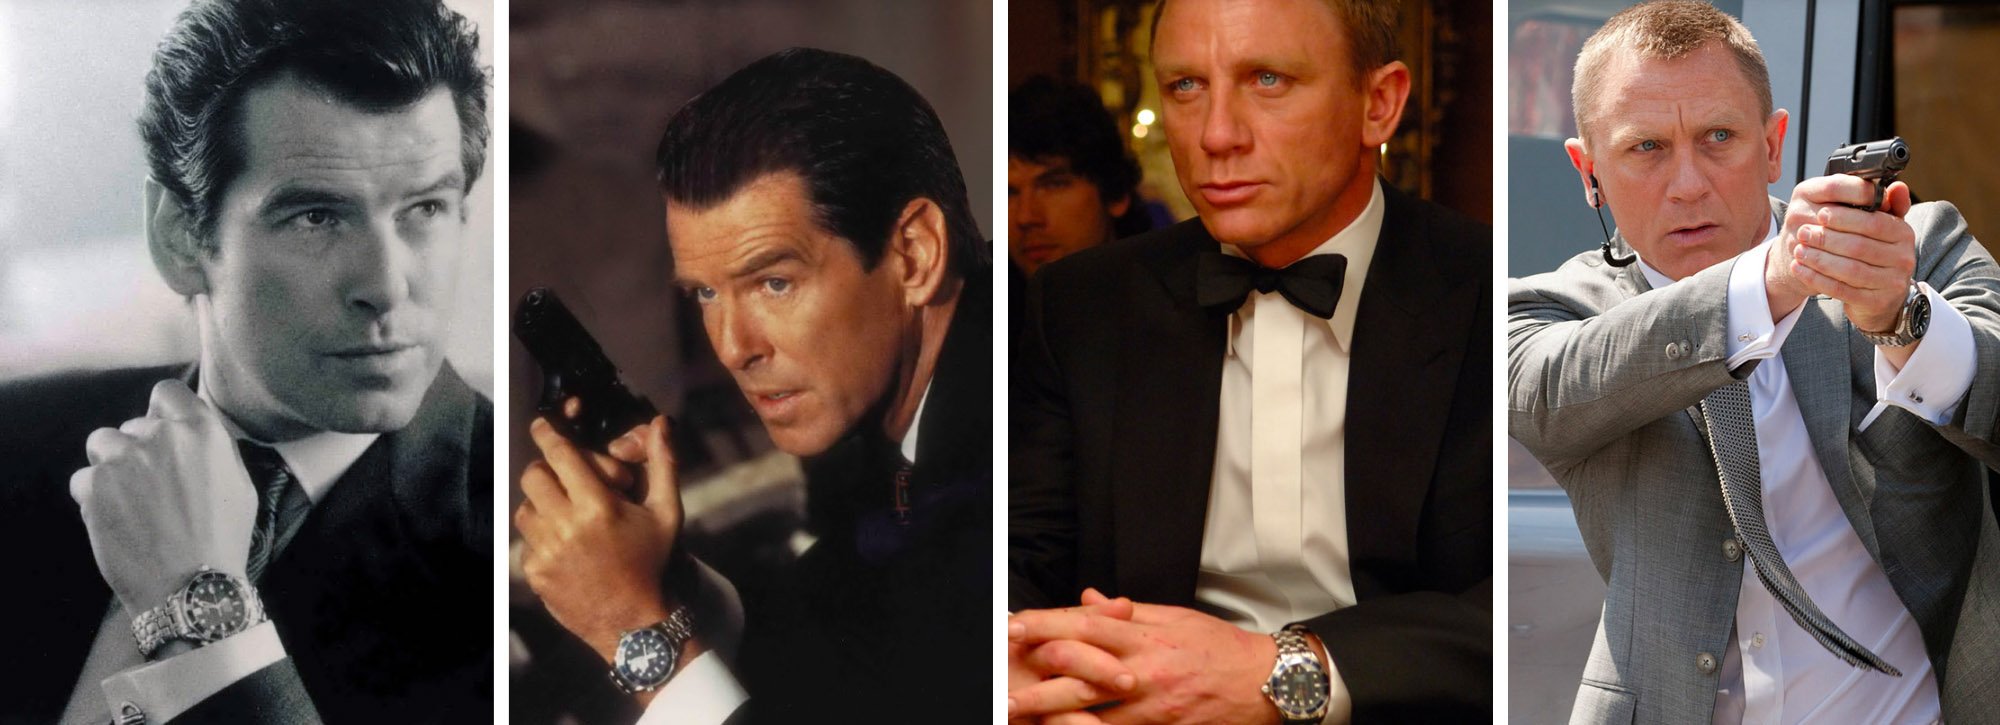 Omega Seamaster James Bond 007 history 1995-2015